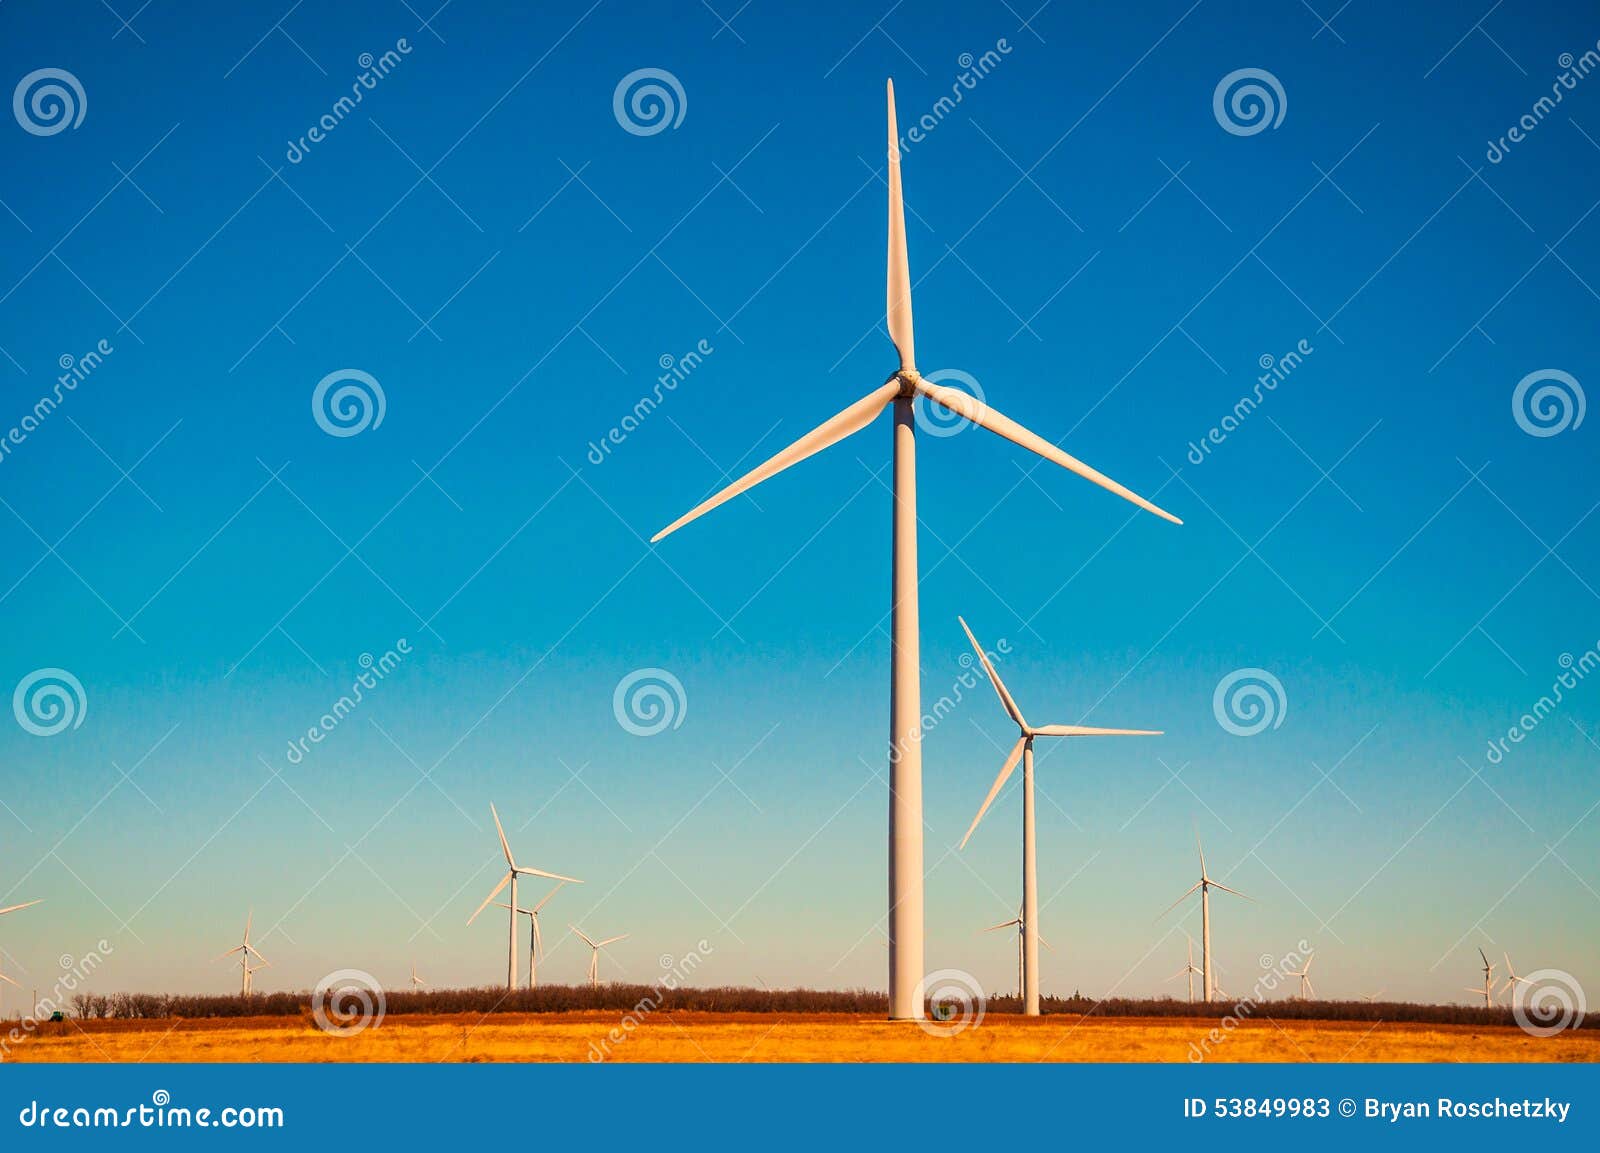 amarillo sunshine wind farm west texas